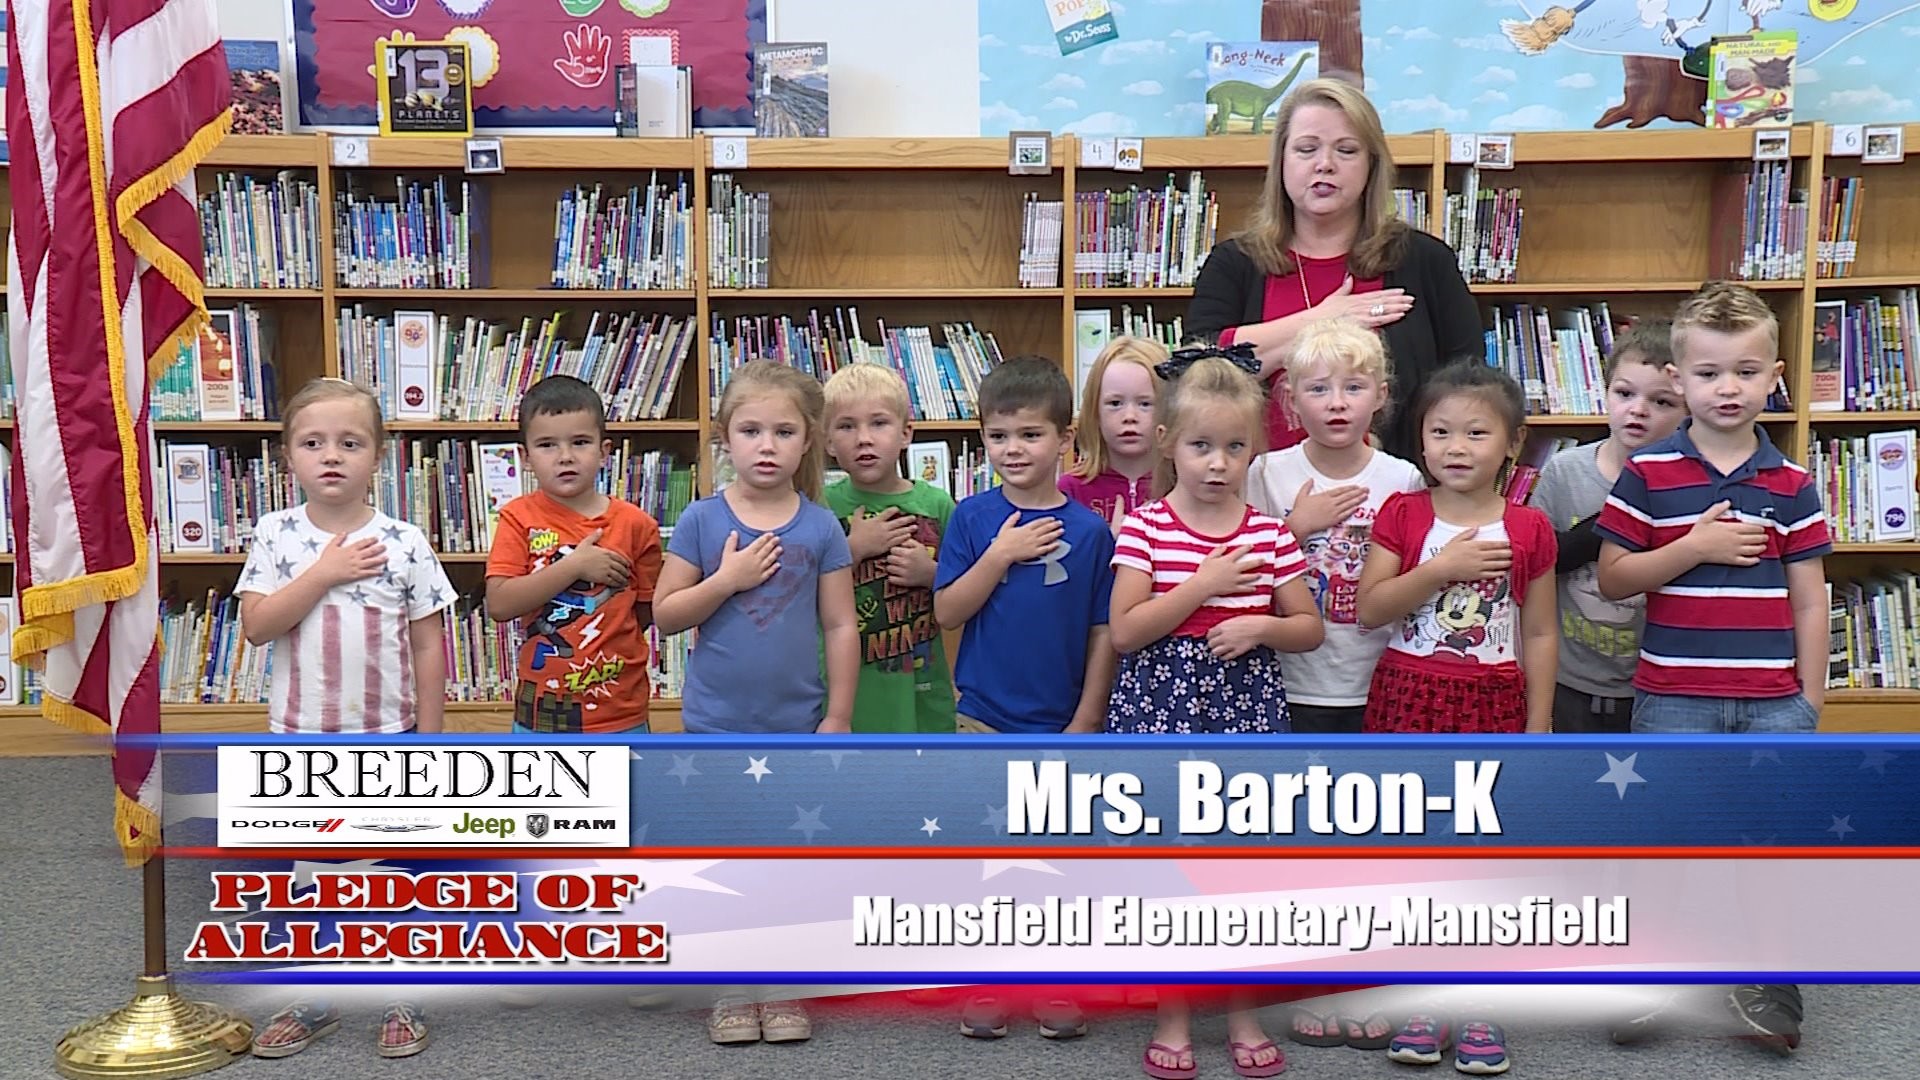 Mrs. Barton - K Mansfield Elementary, Mansfield